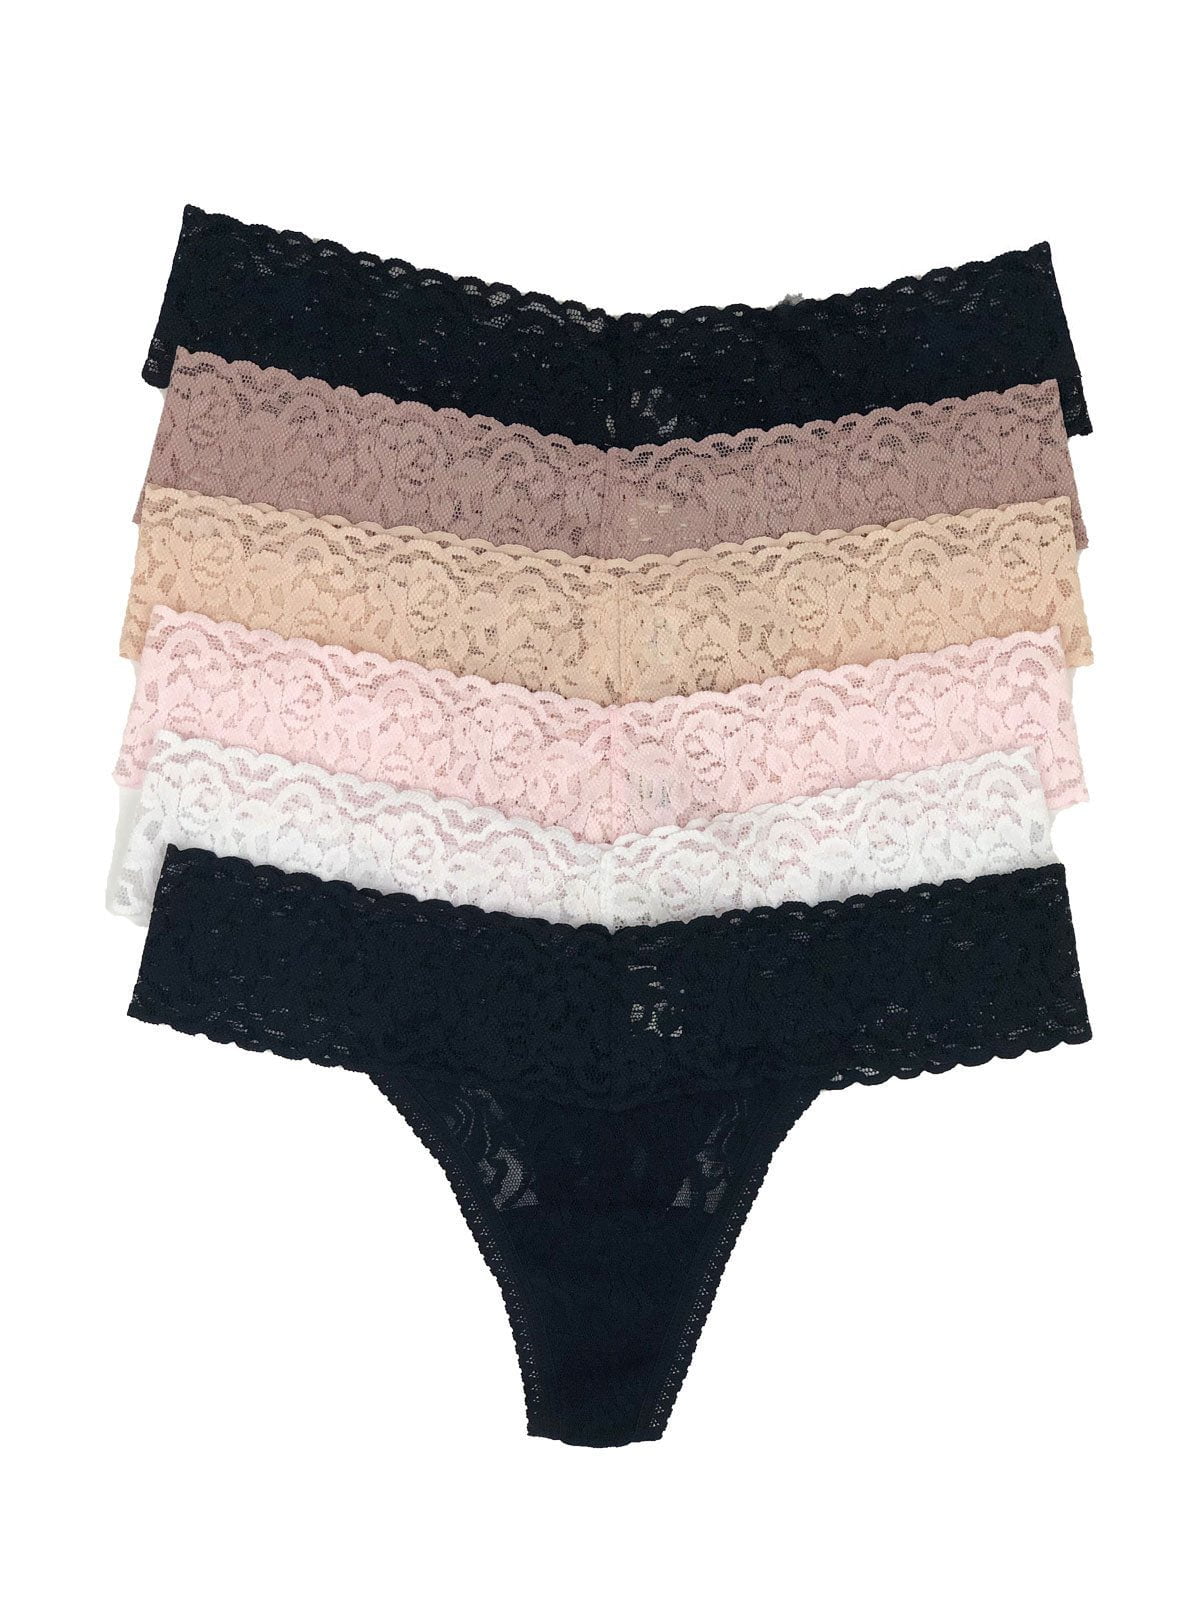 Felina So Smooth Micromodal Thong Panty Underwear 101P - Mercado 1 to 20  Dirham Shop